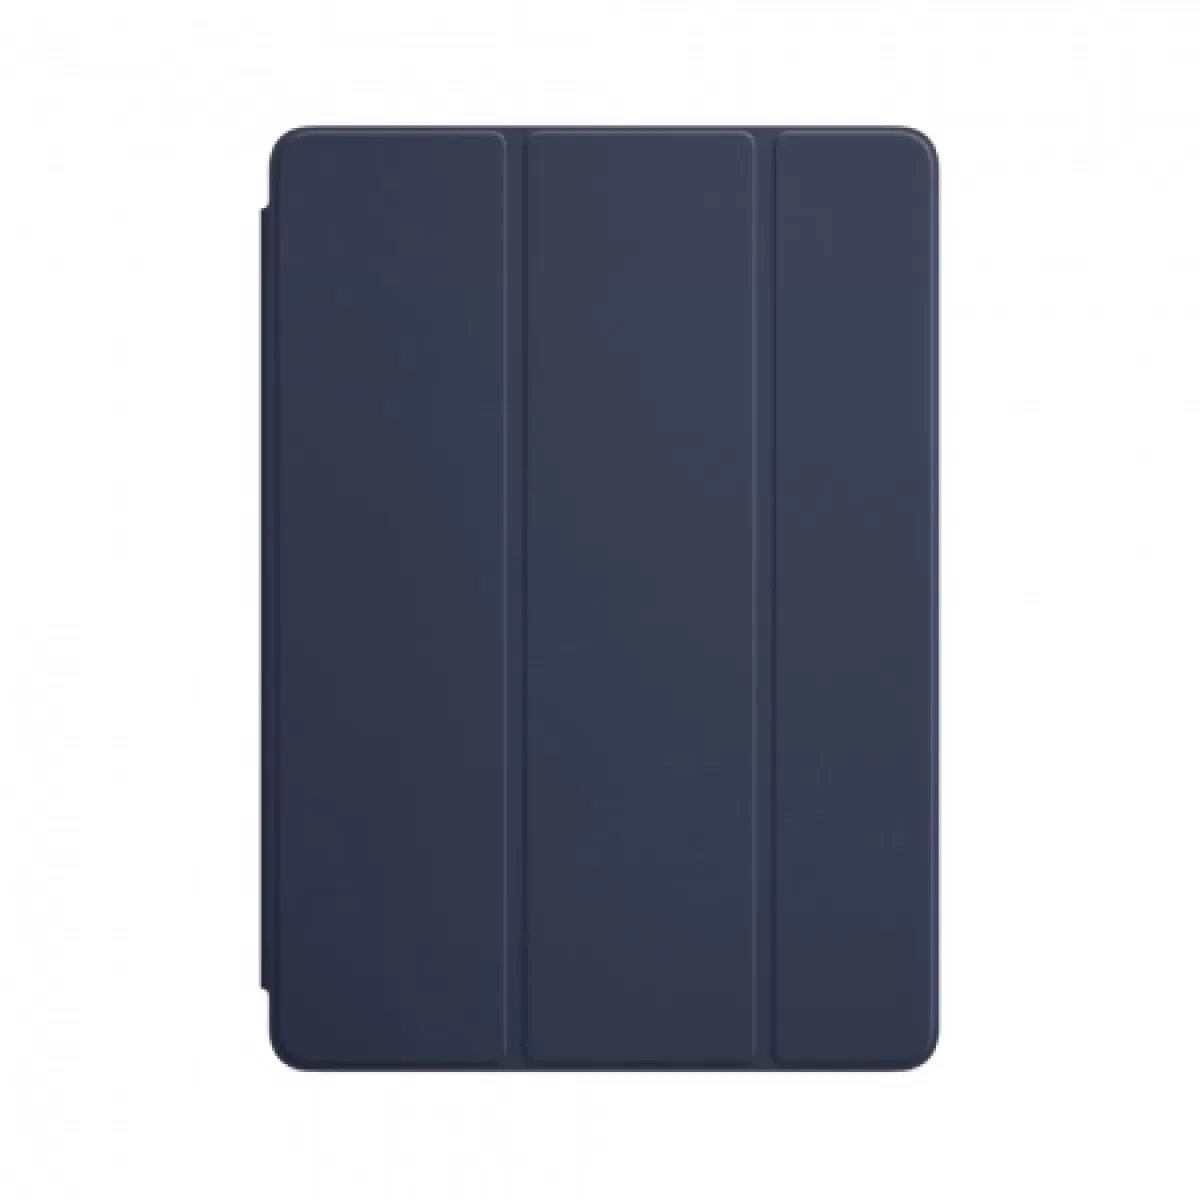 Apple 9.7inch iPad (5th gen) Smart Cover Midnight Blue